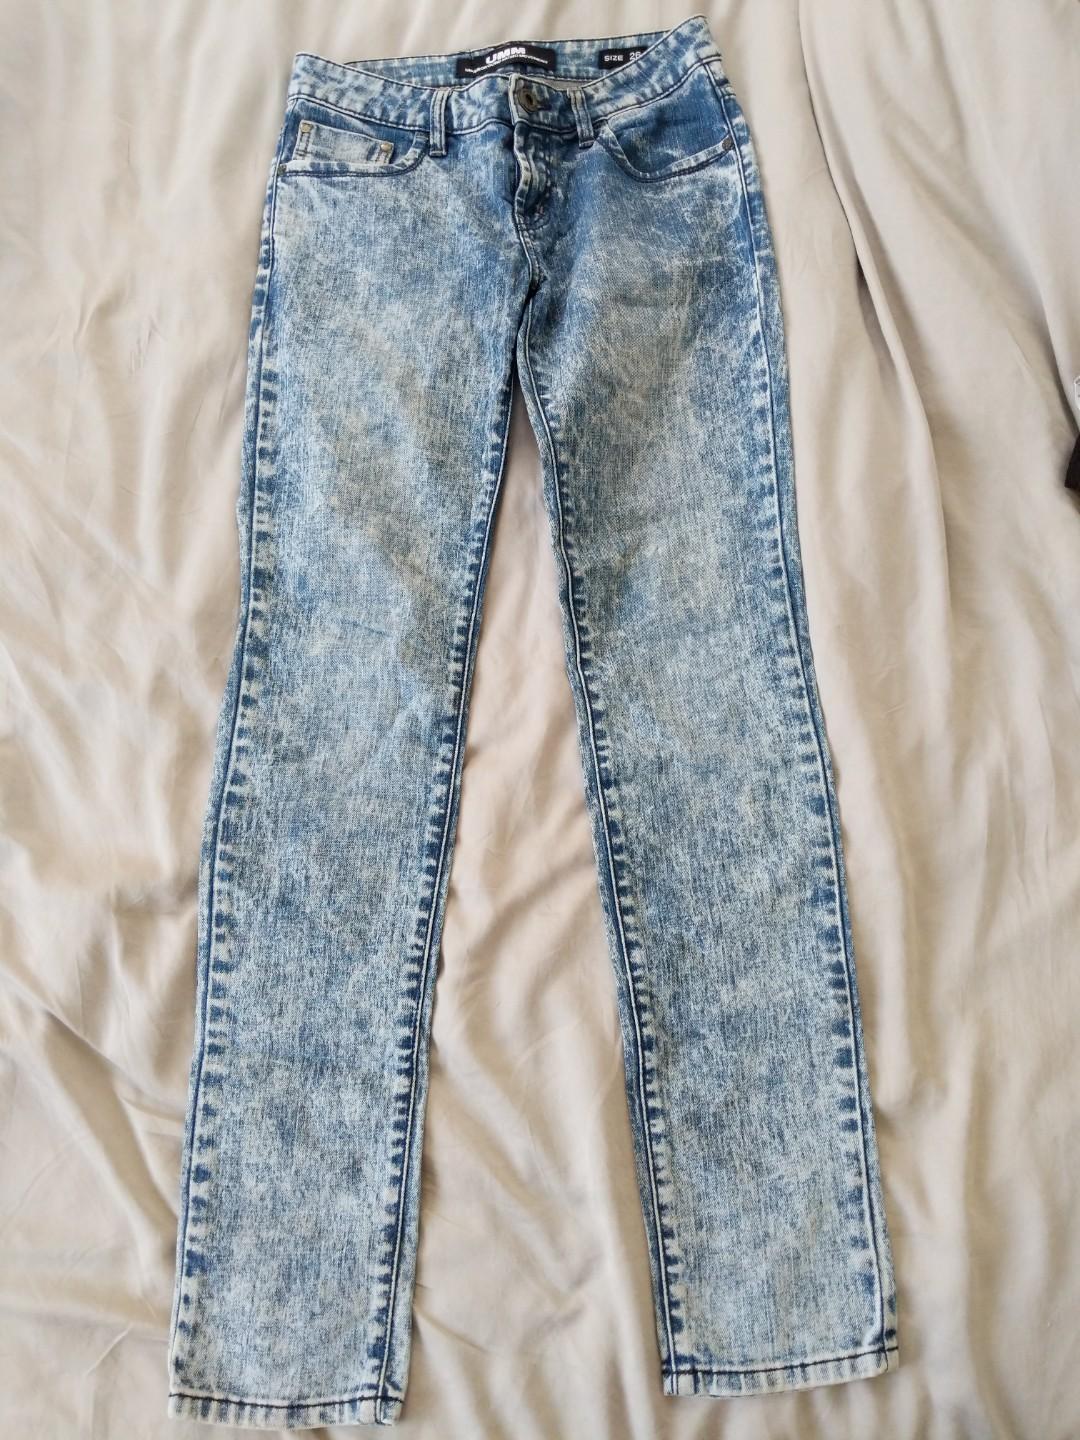 umm jeans price